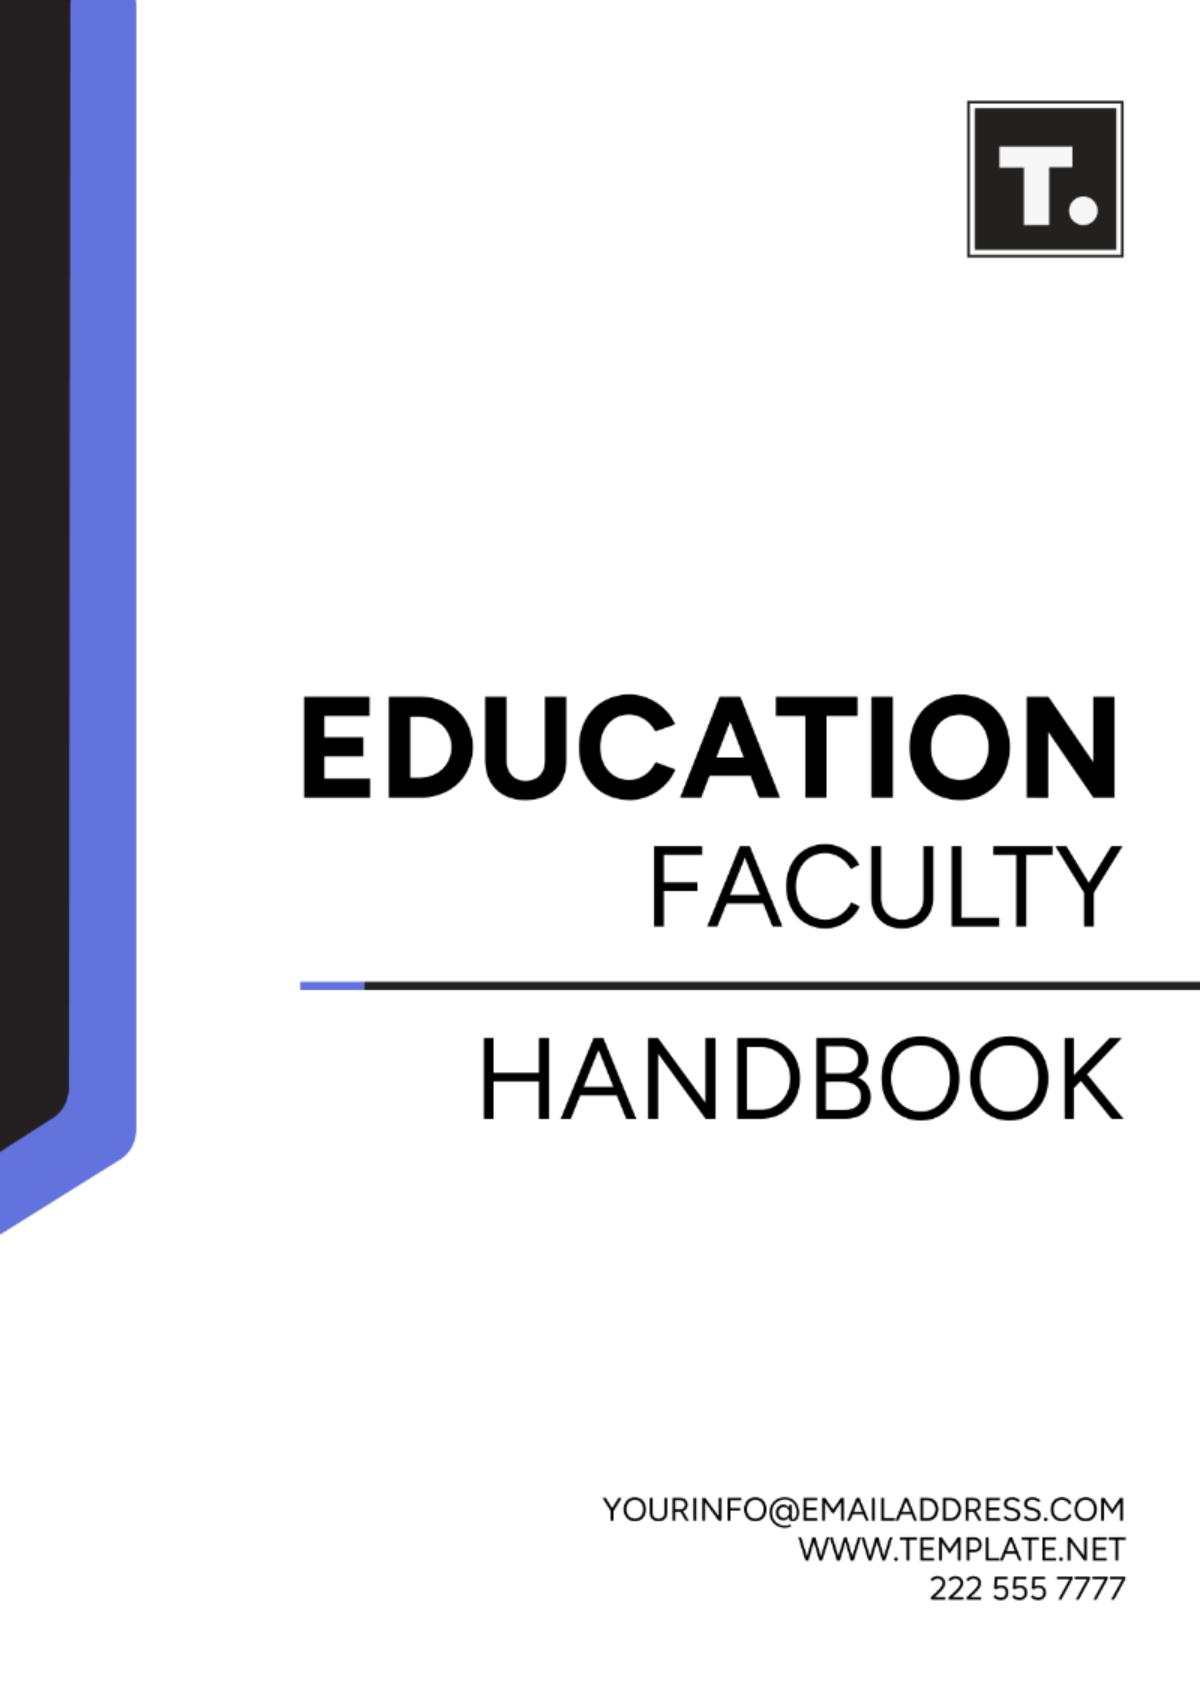 Free Education Faculty Handbook Template